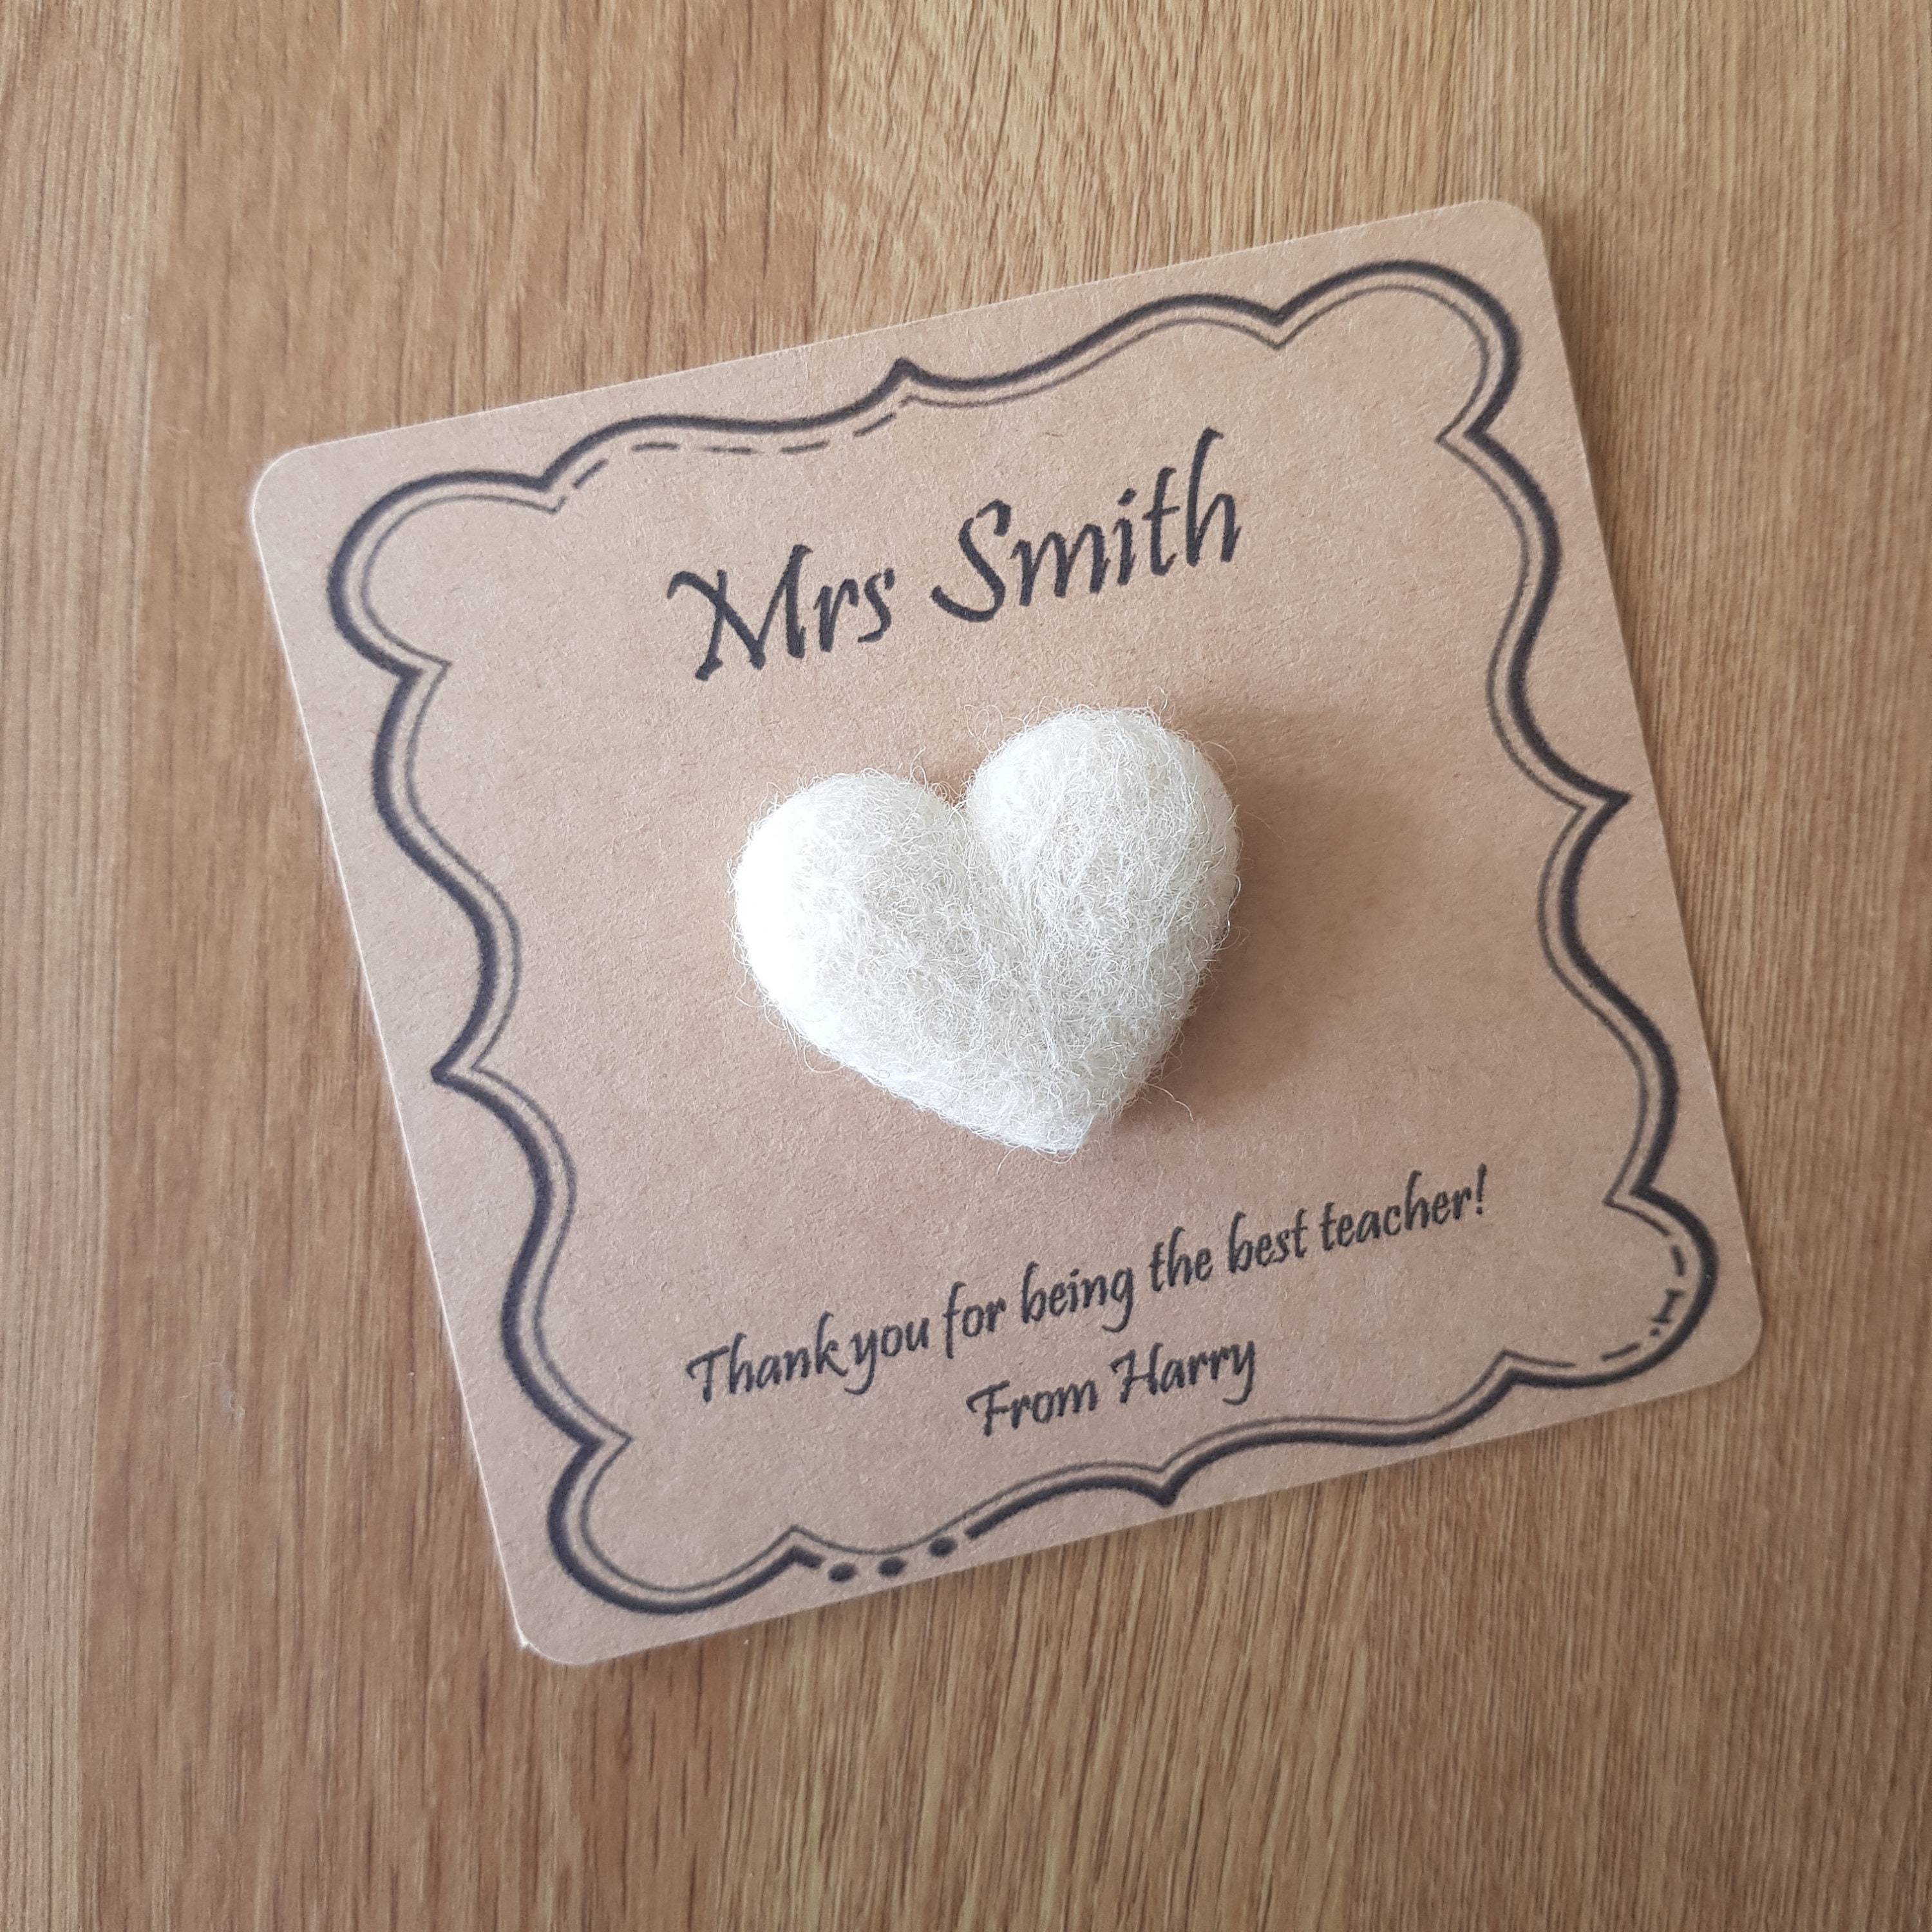 Personalised Gift Needle Felted Heart Brooch Handmade Pretty White Merino Wool